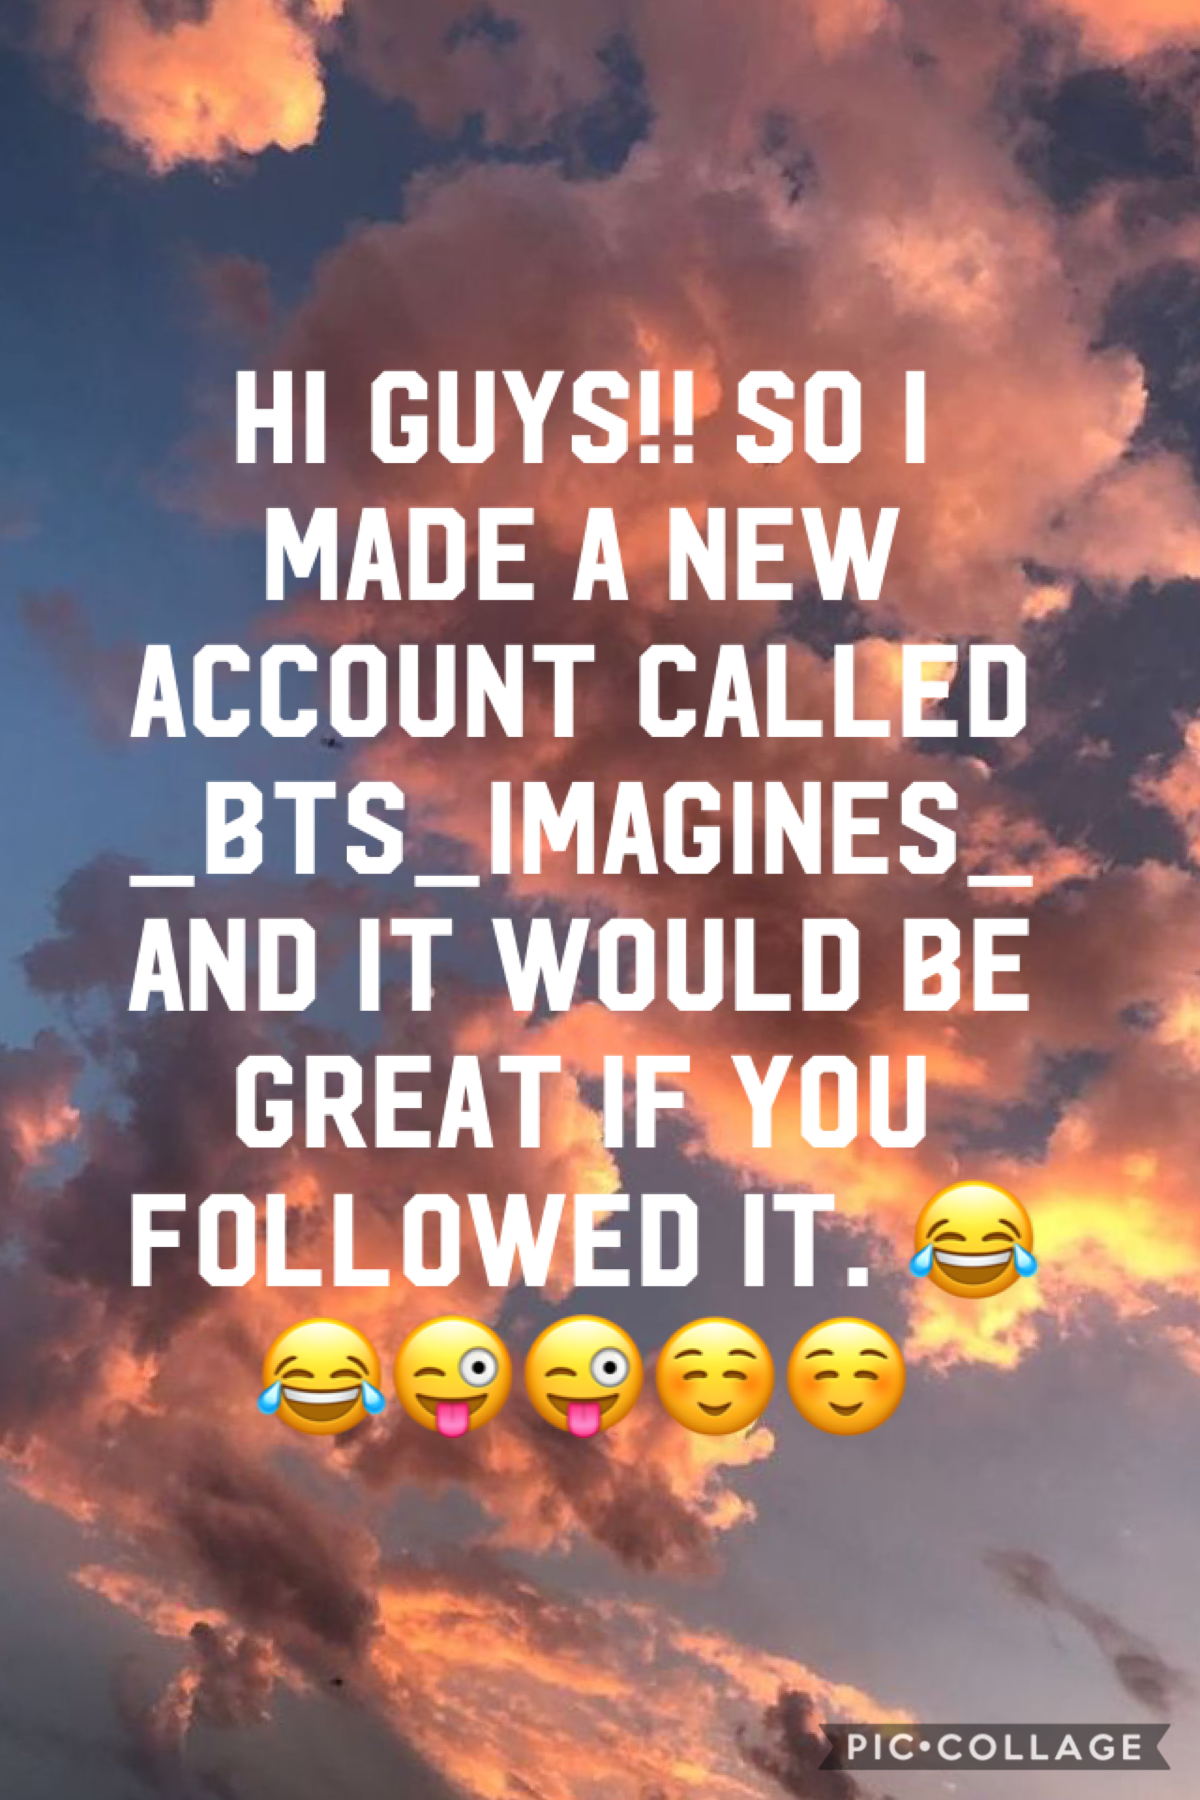 Yeeeeeee I made a new account called _BTS_Imagines_ lololol it would be great if ya followed 😂 lol thanks!!